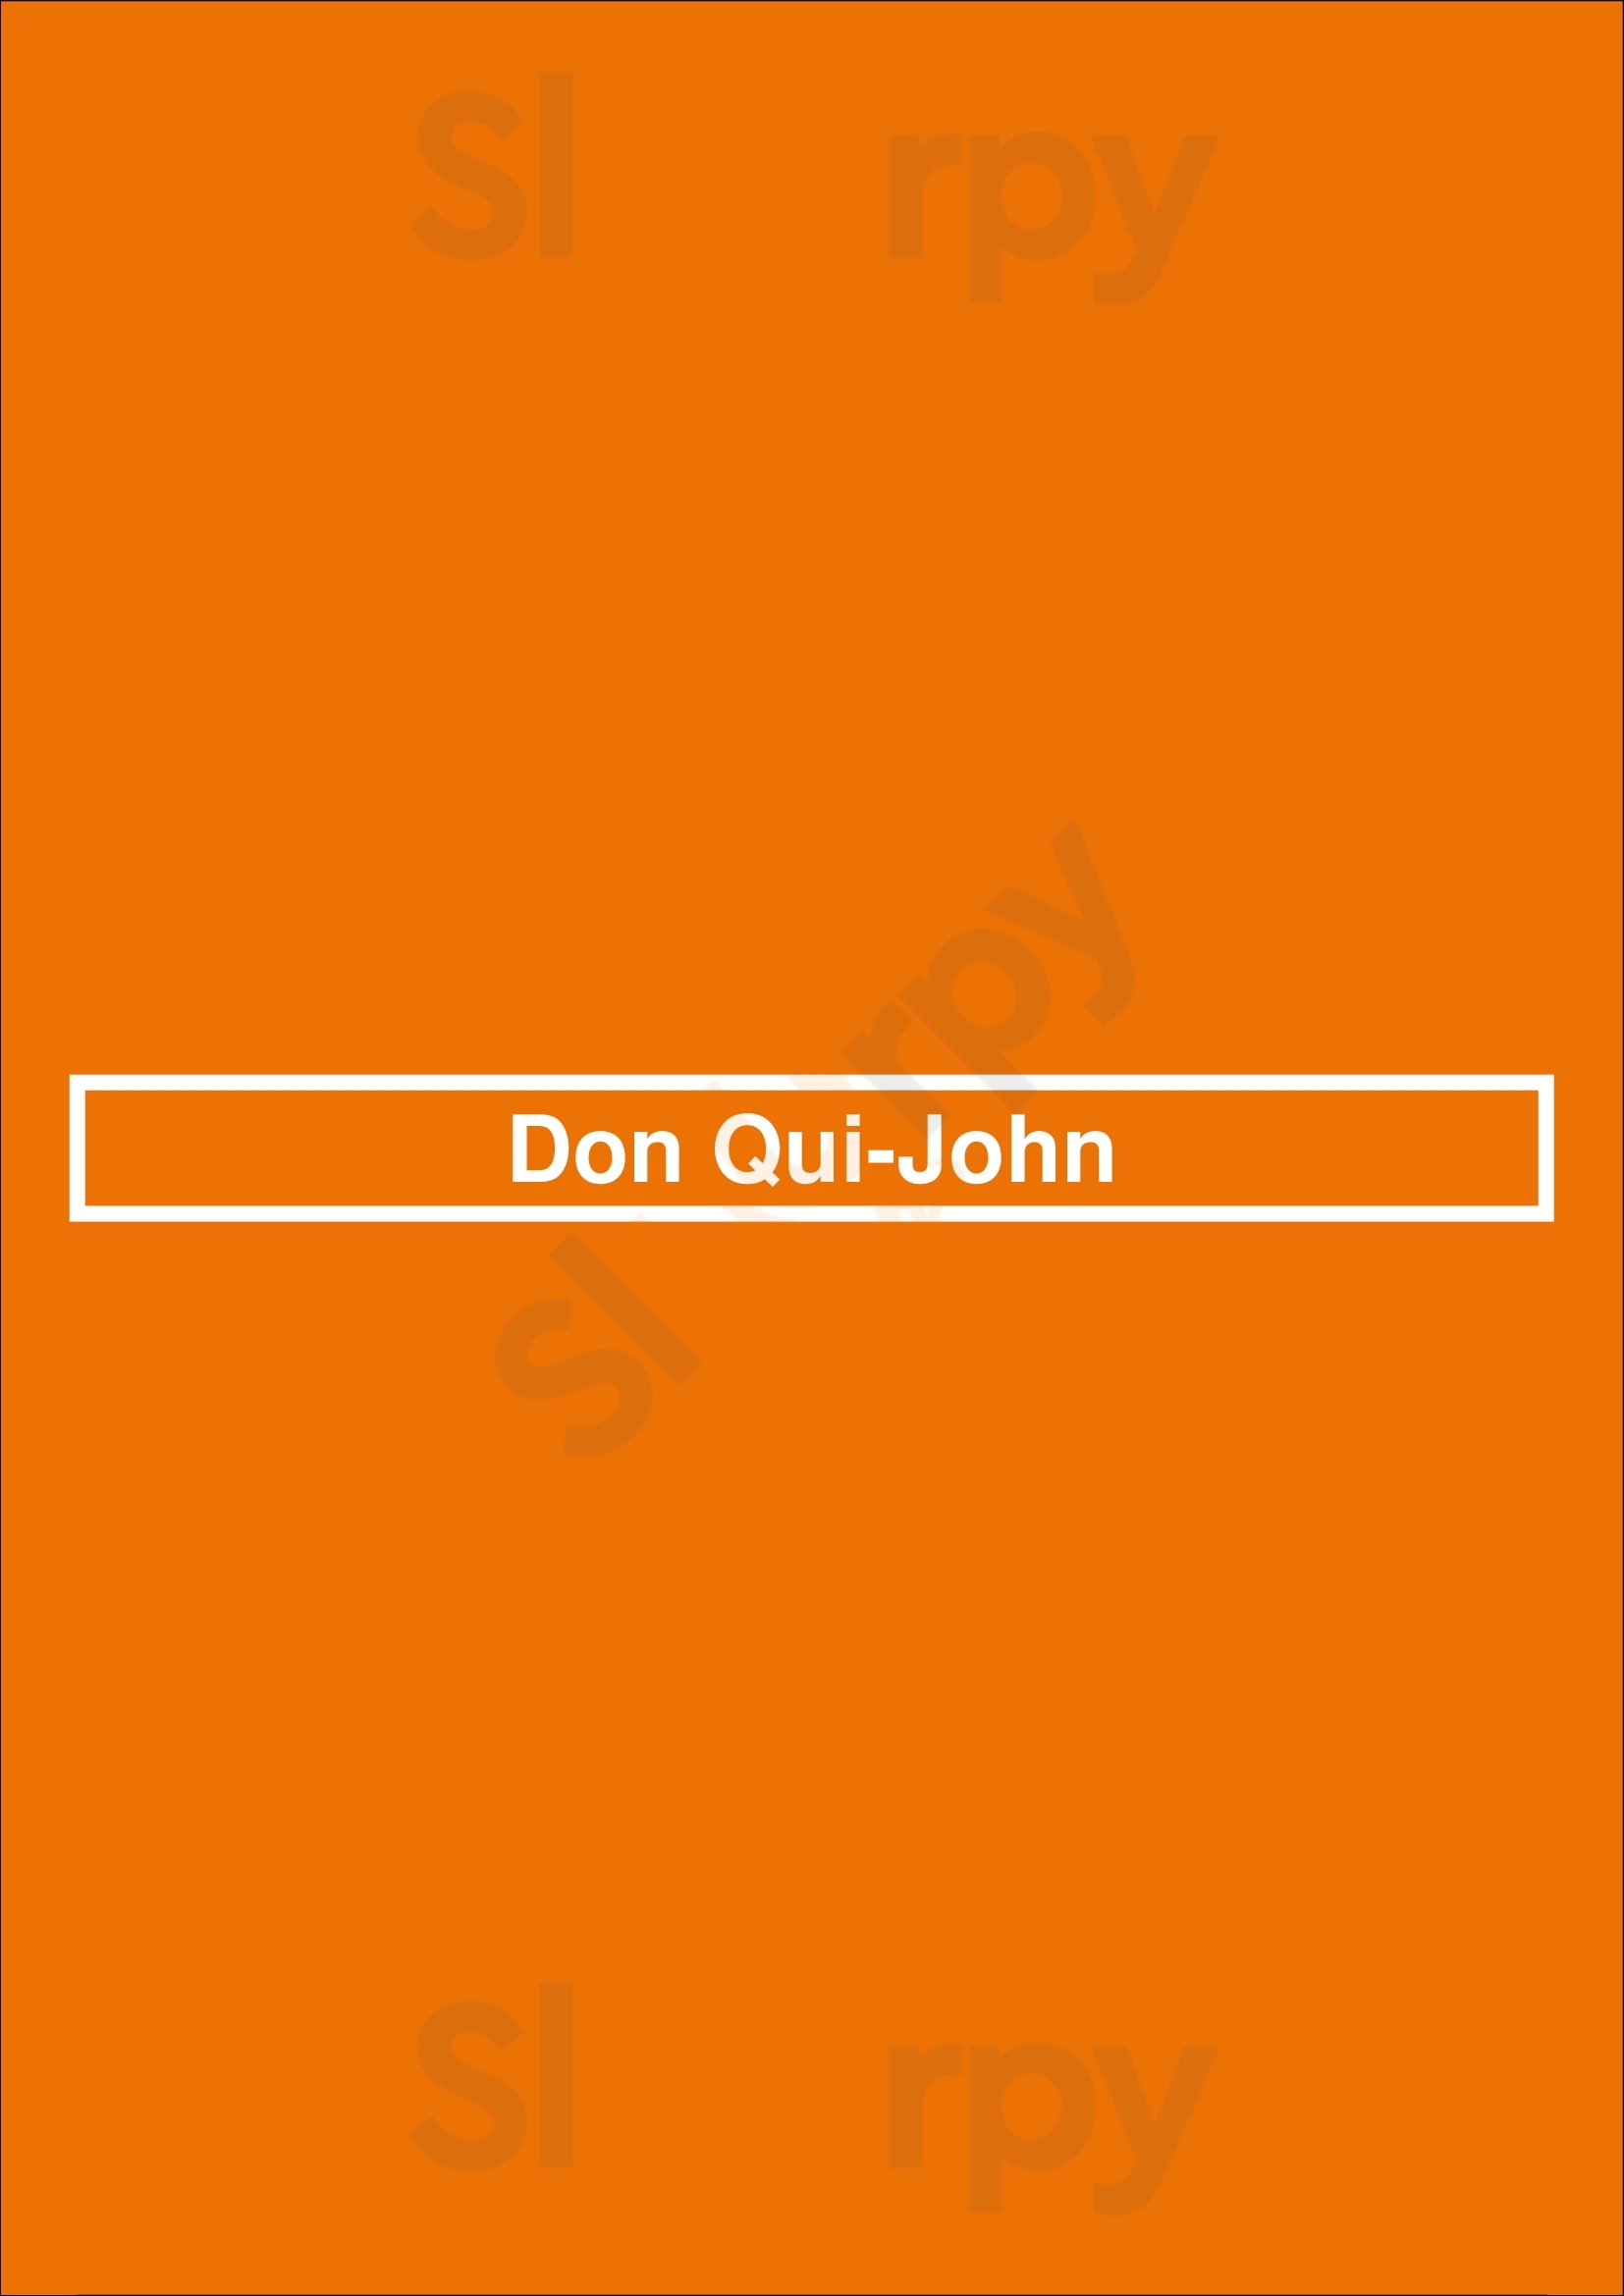 Don Qui-john Breda Menu - 1